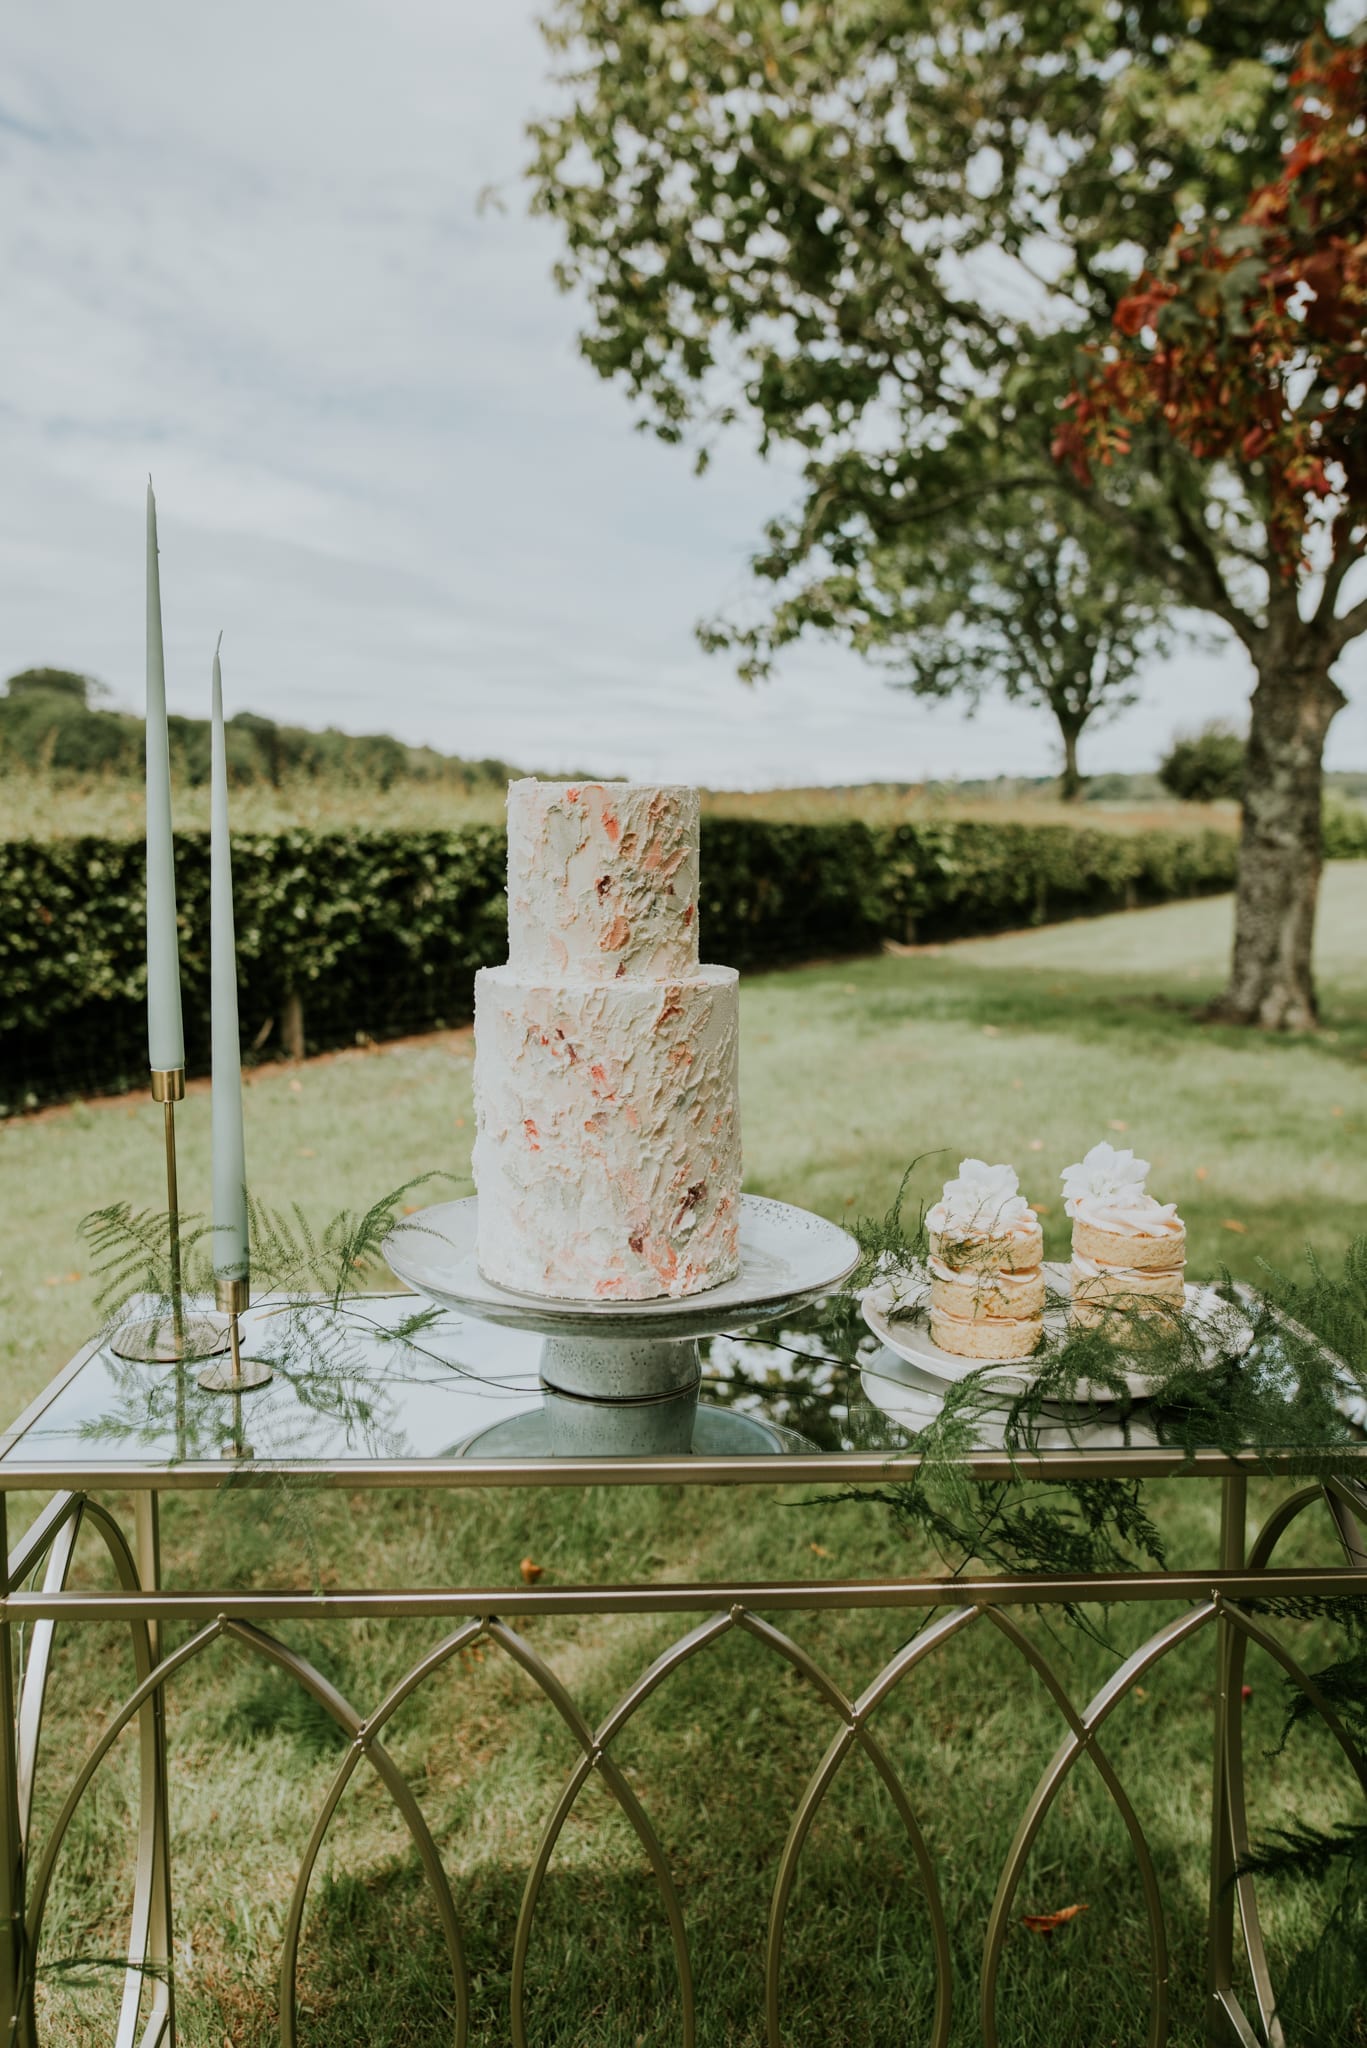 Outdoor wedding cake display